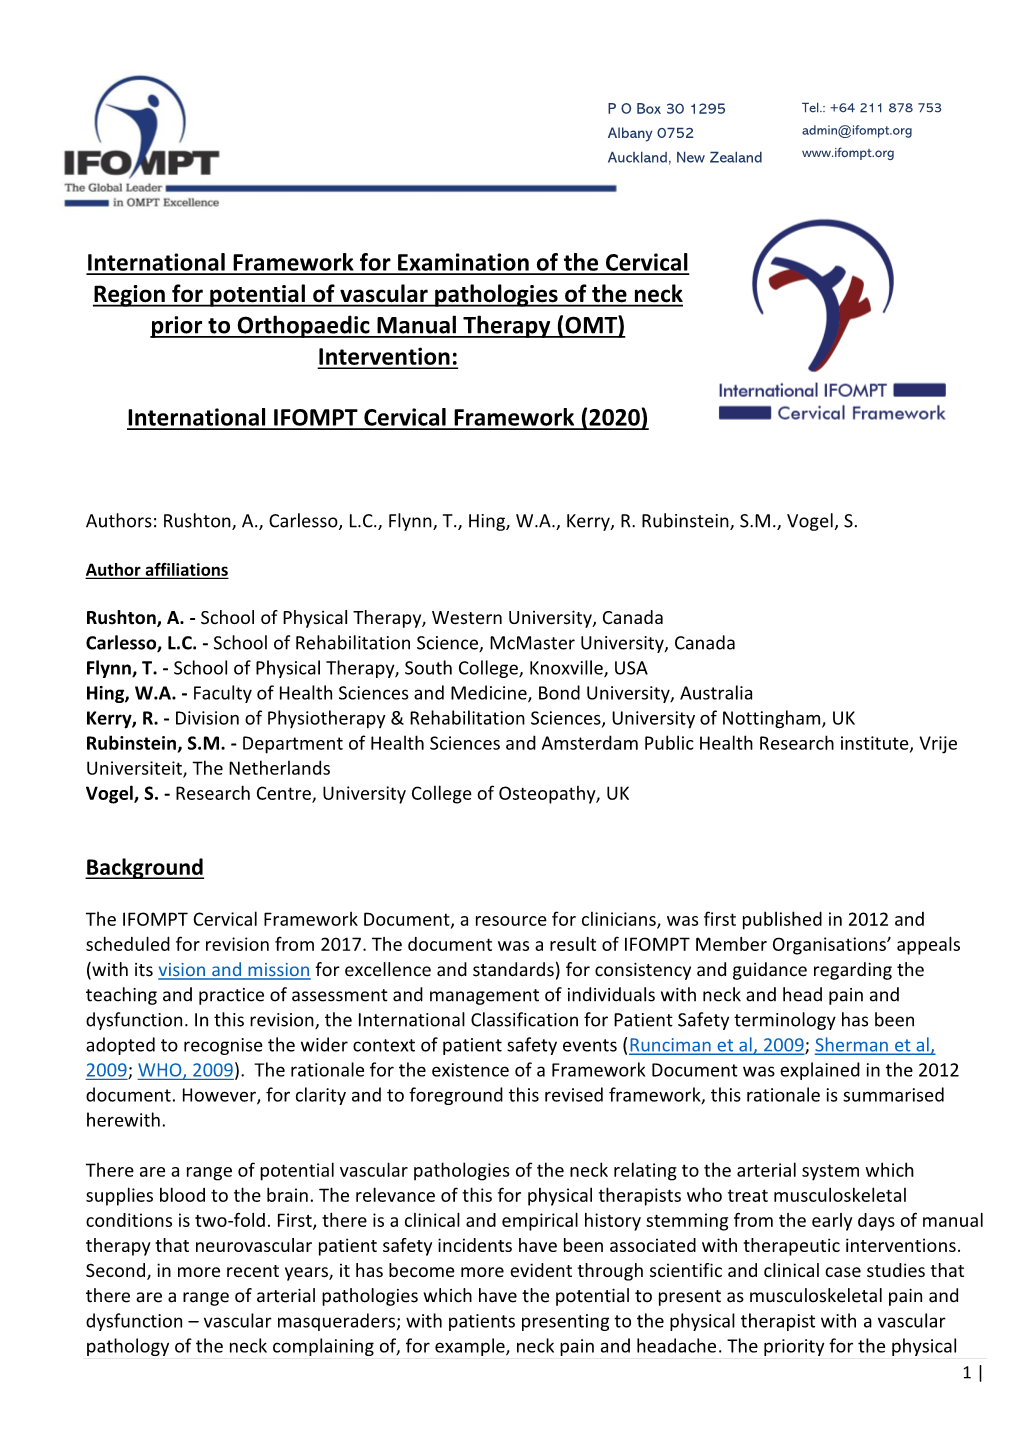 International Framework for Examination of the Cervical Region